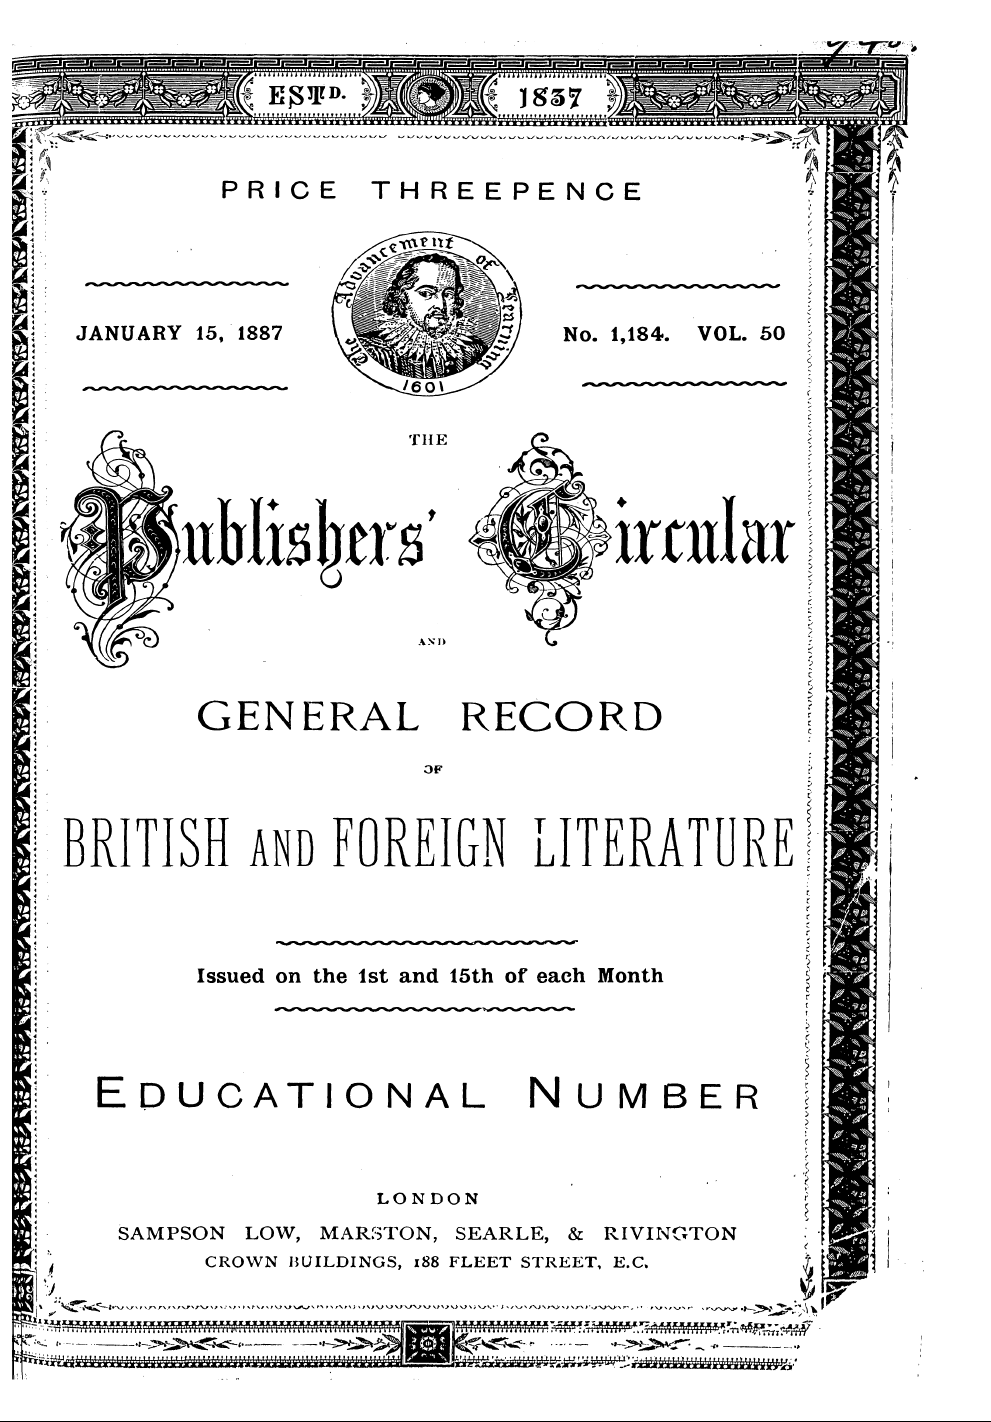 Publishers’ Circular (1880-1890): jS F Y, 1st edition - Mkv^^^— — — —~~~— ^ — —,~ .. __ .—^^^ ™|...